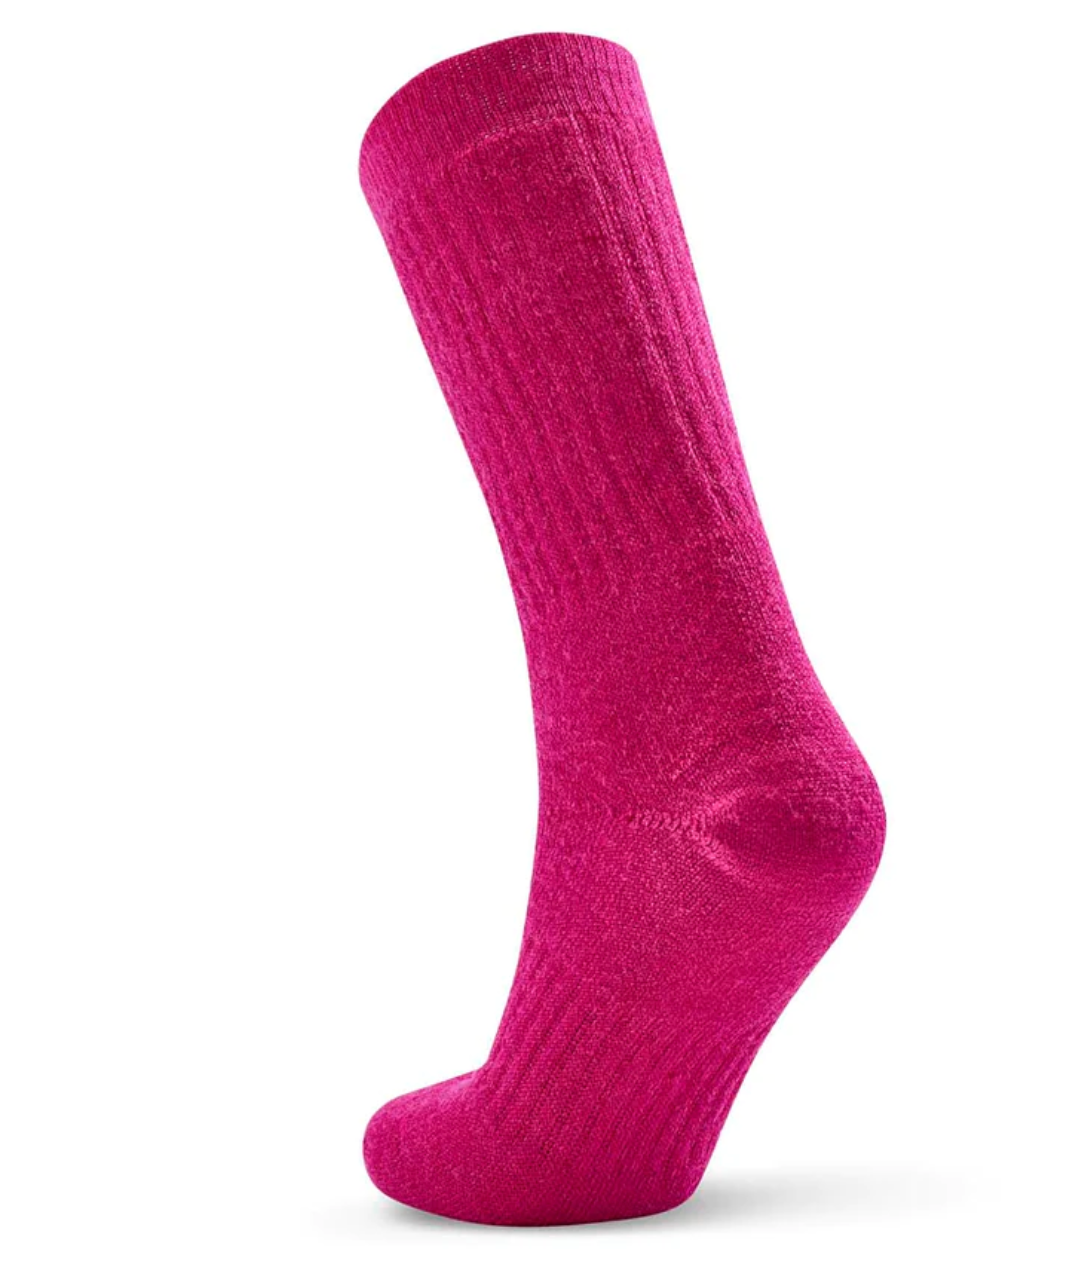 Southern Merino Wool Boot Socks in Pink - Narrow Fit